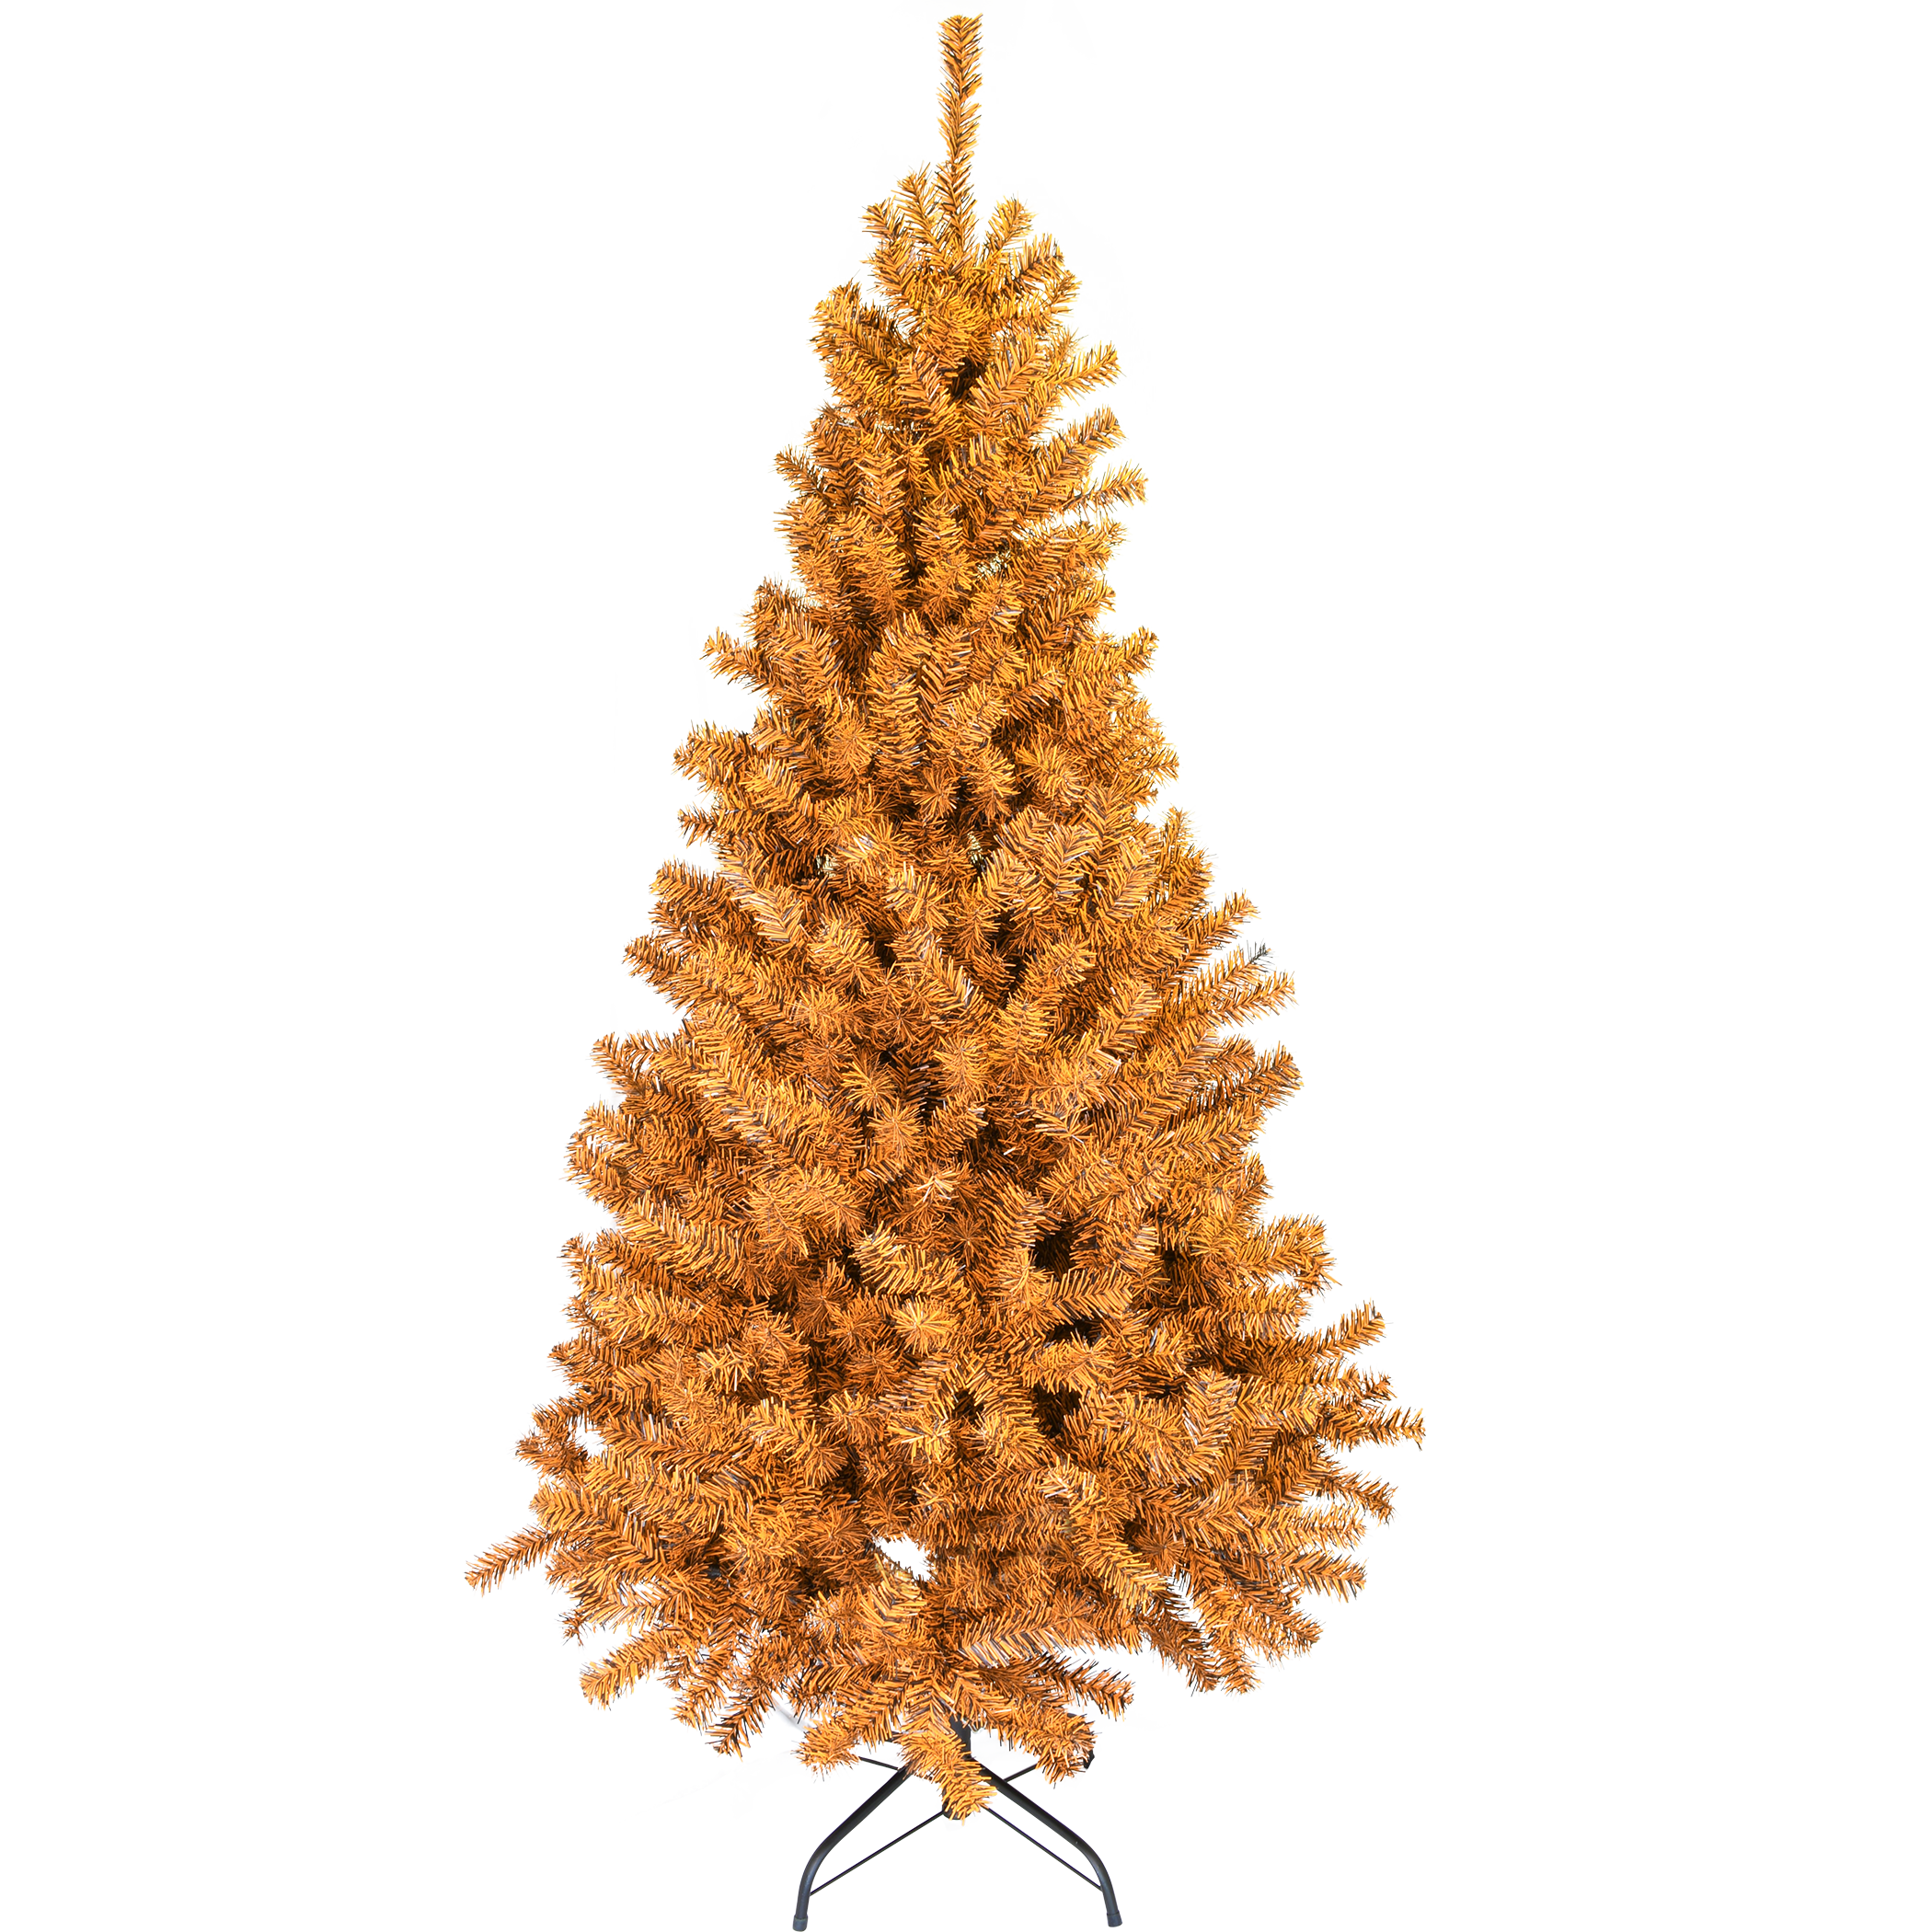 30% Off Sale! - Black and Orange Halloween / Fall Colored Christmas Tree 6 Feet Tall